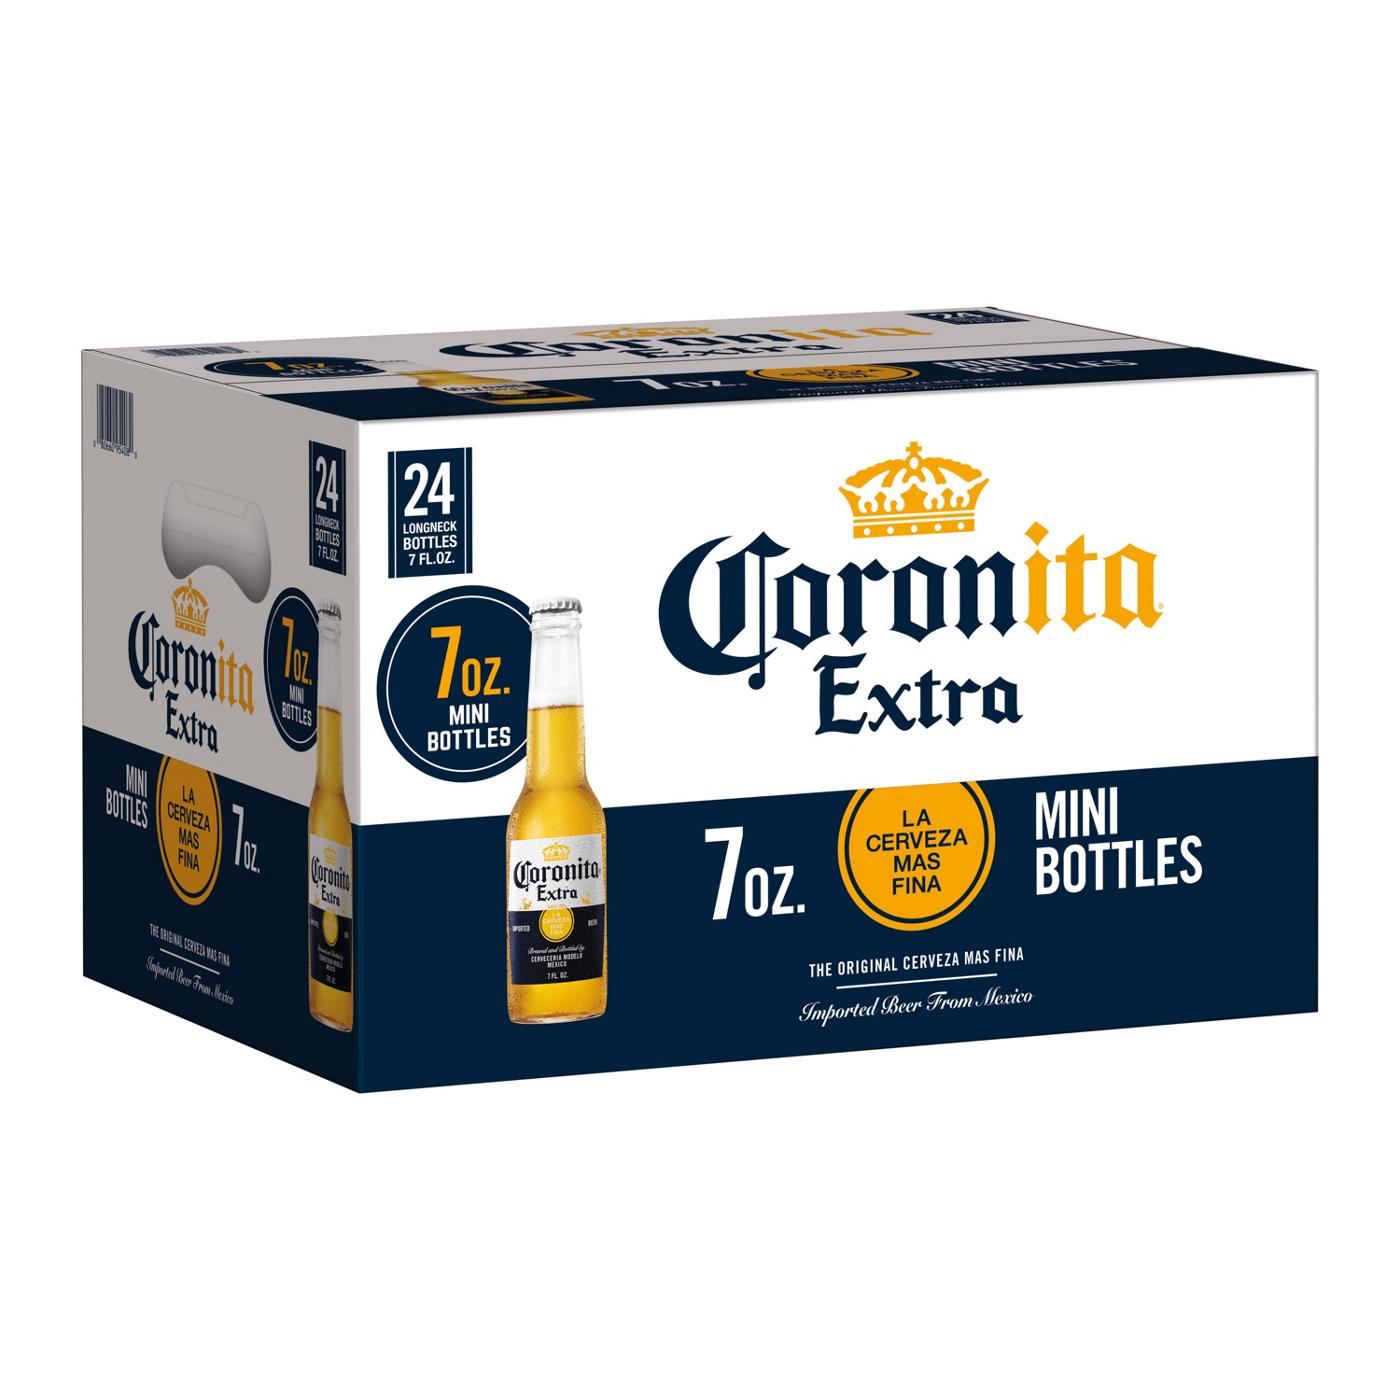 Corona Extra Coronita Mexican Lager Import Beer 7 oz Bottles, 24 pk; image 1 of 11